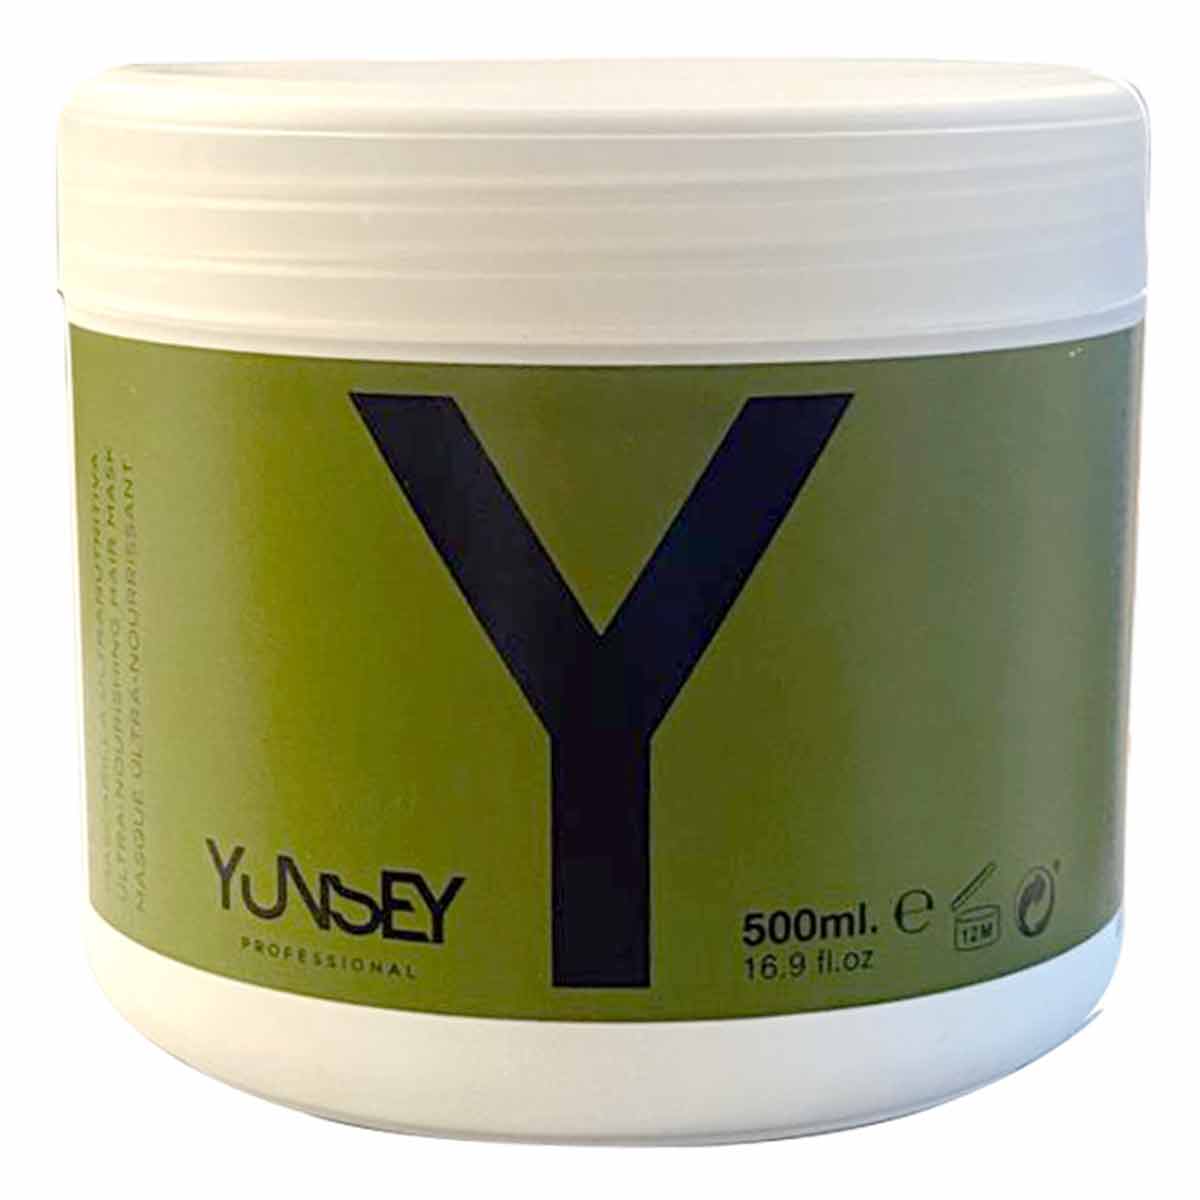 ماسک مو اولترا ویتامینه یانسی YUNSEY مدل  ULTRA NOURISHING MASK REPAIR مغذی و ترمیم کننده قوی موهای آسیب دیده حجم 500 میل